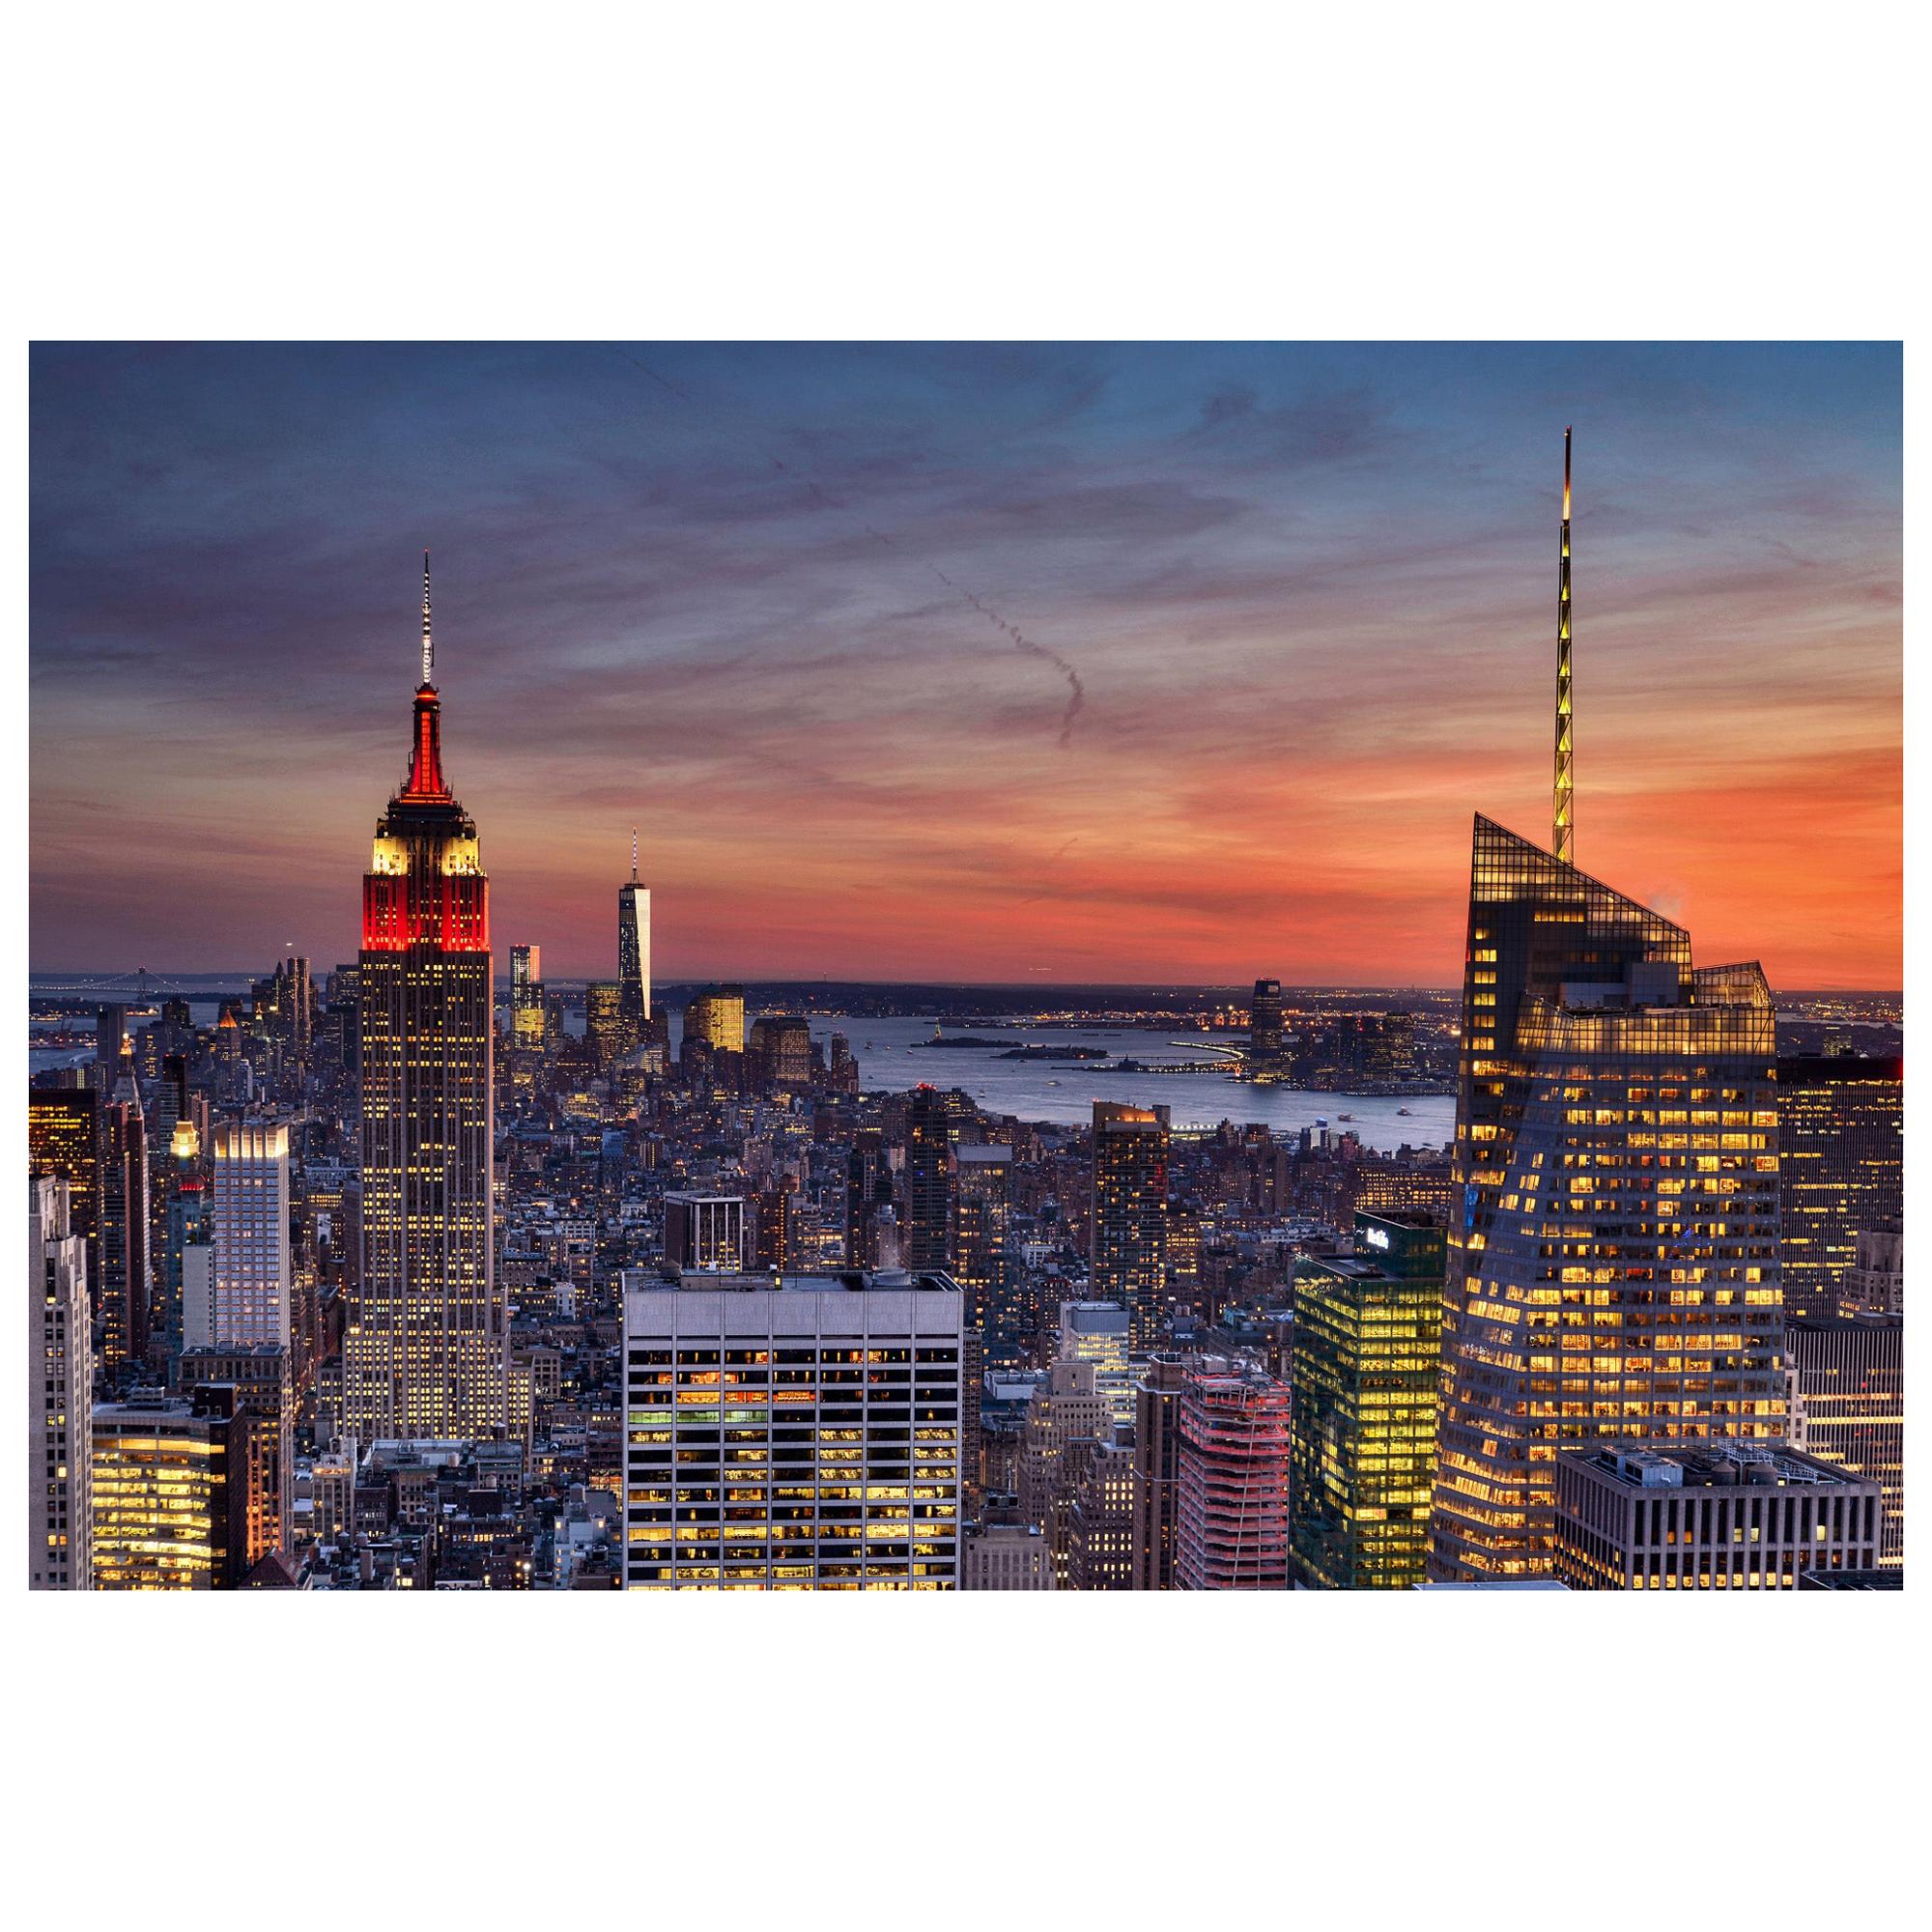 New York Manhattan Landscape, Color Photography Fine Art Print by Rainer Martini